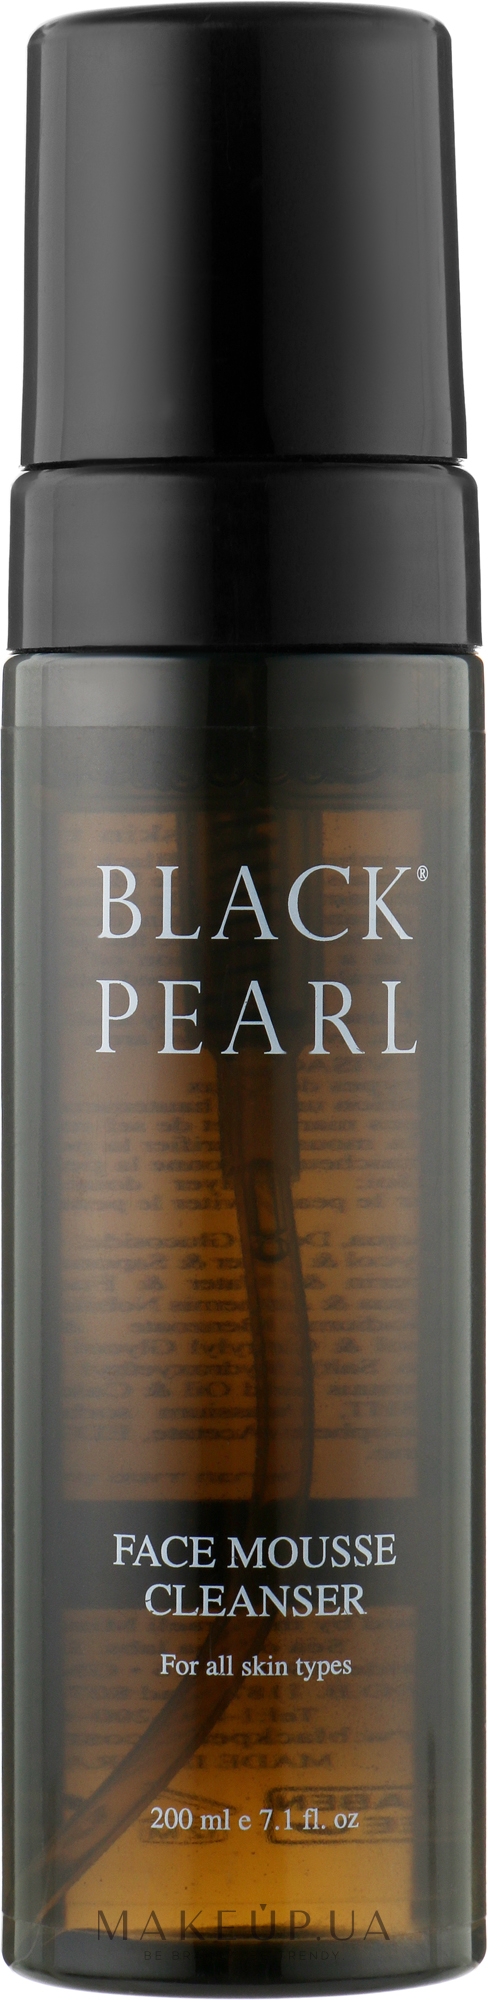 Очищающий мусс для лица - Sea Of Spa Black Pearl Face Mousse Cleanser For All Skin Types — фото 200ml